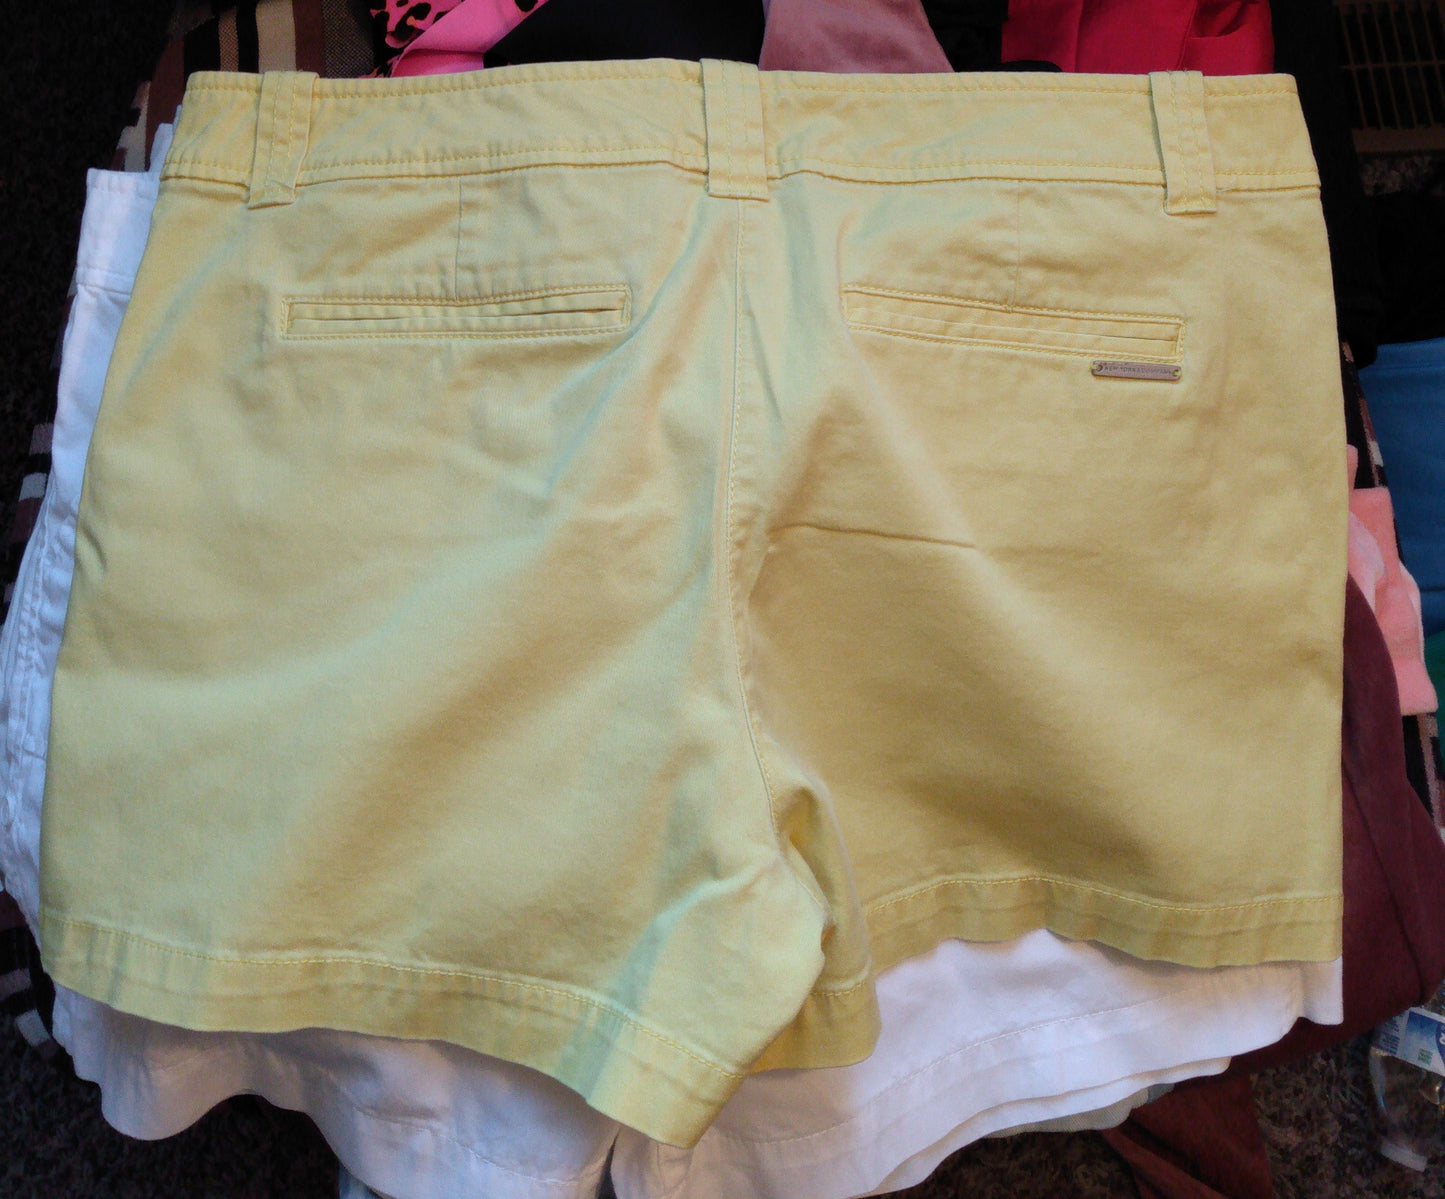 Yellow Cotton Shorts